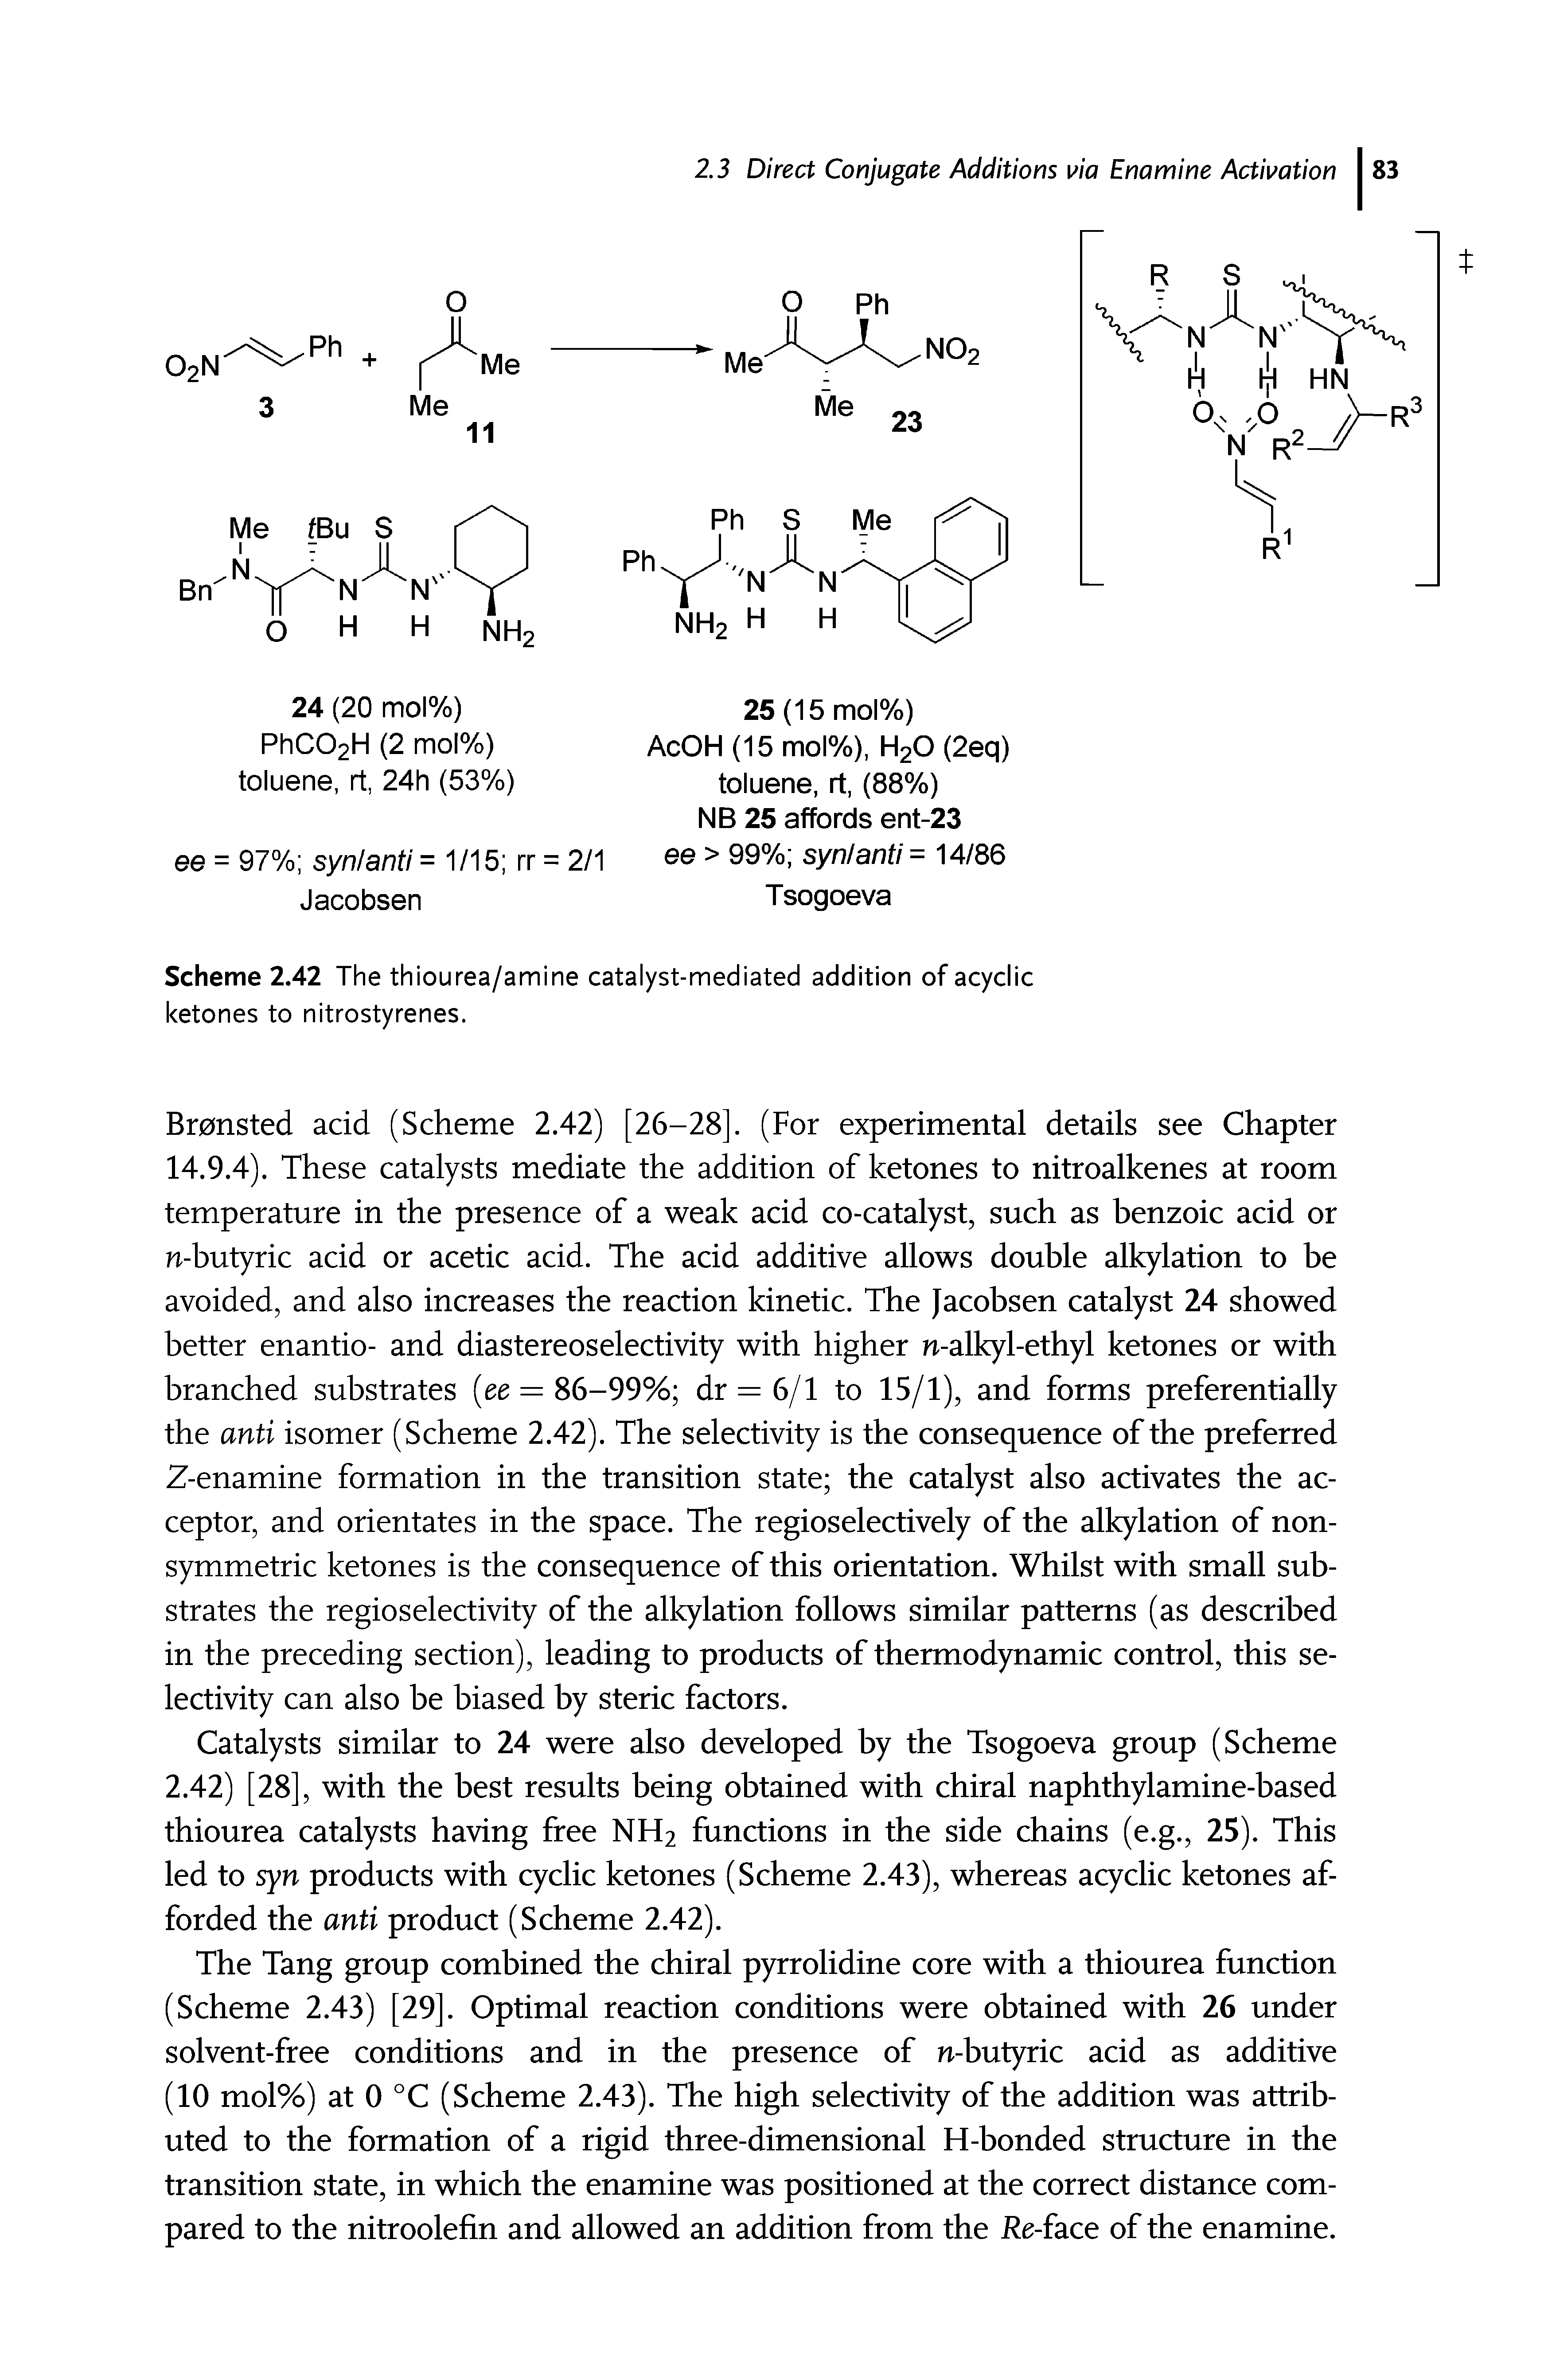 Scheme 2.42 The thiourea/amine catalyst-mediated addition of acyclic ketones to nitrostyrenes.